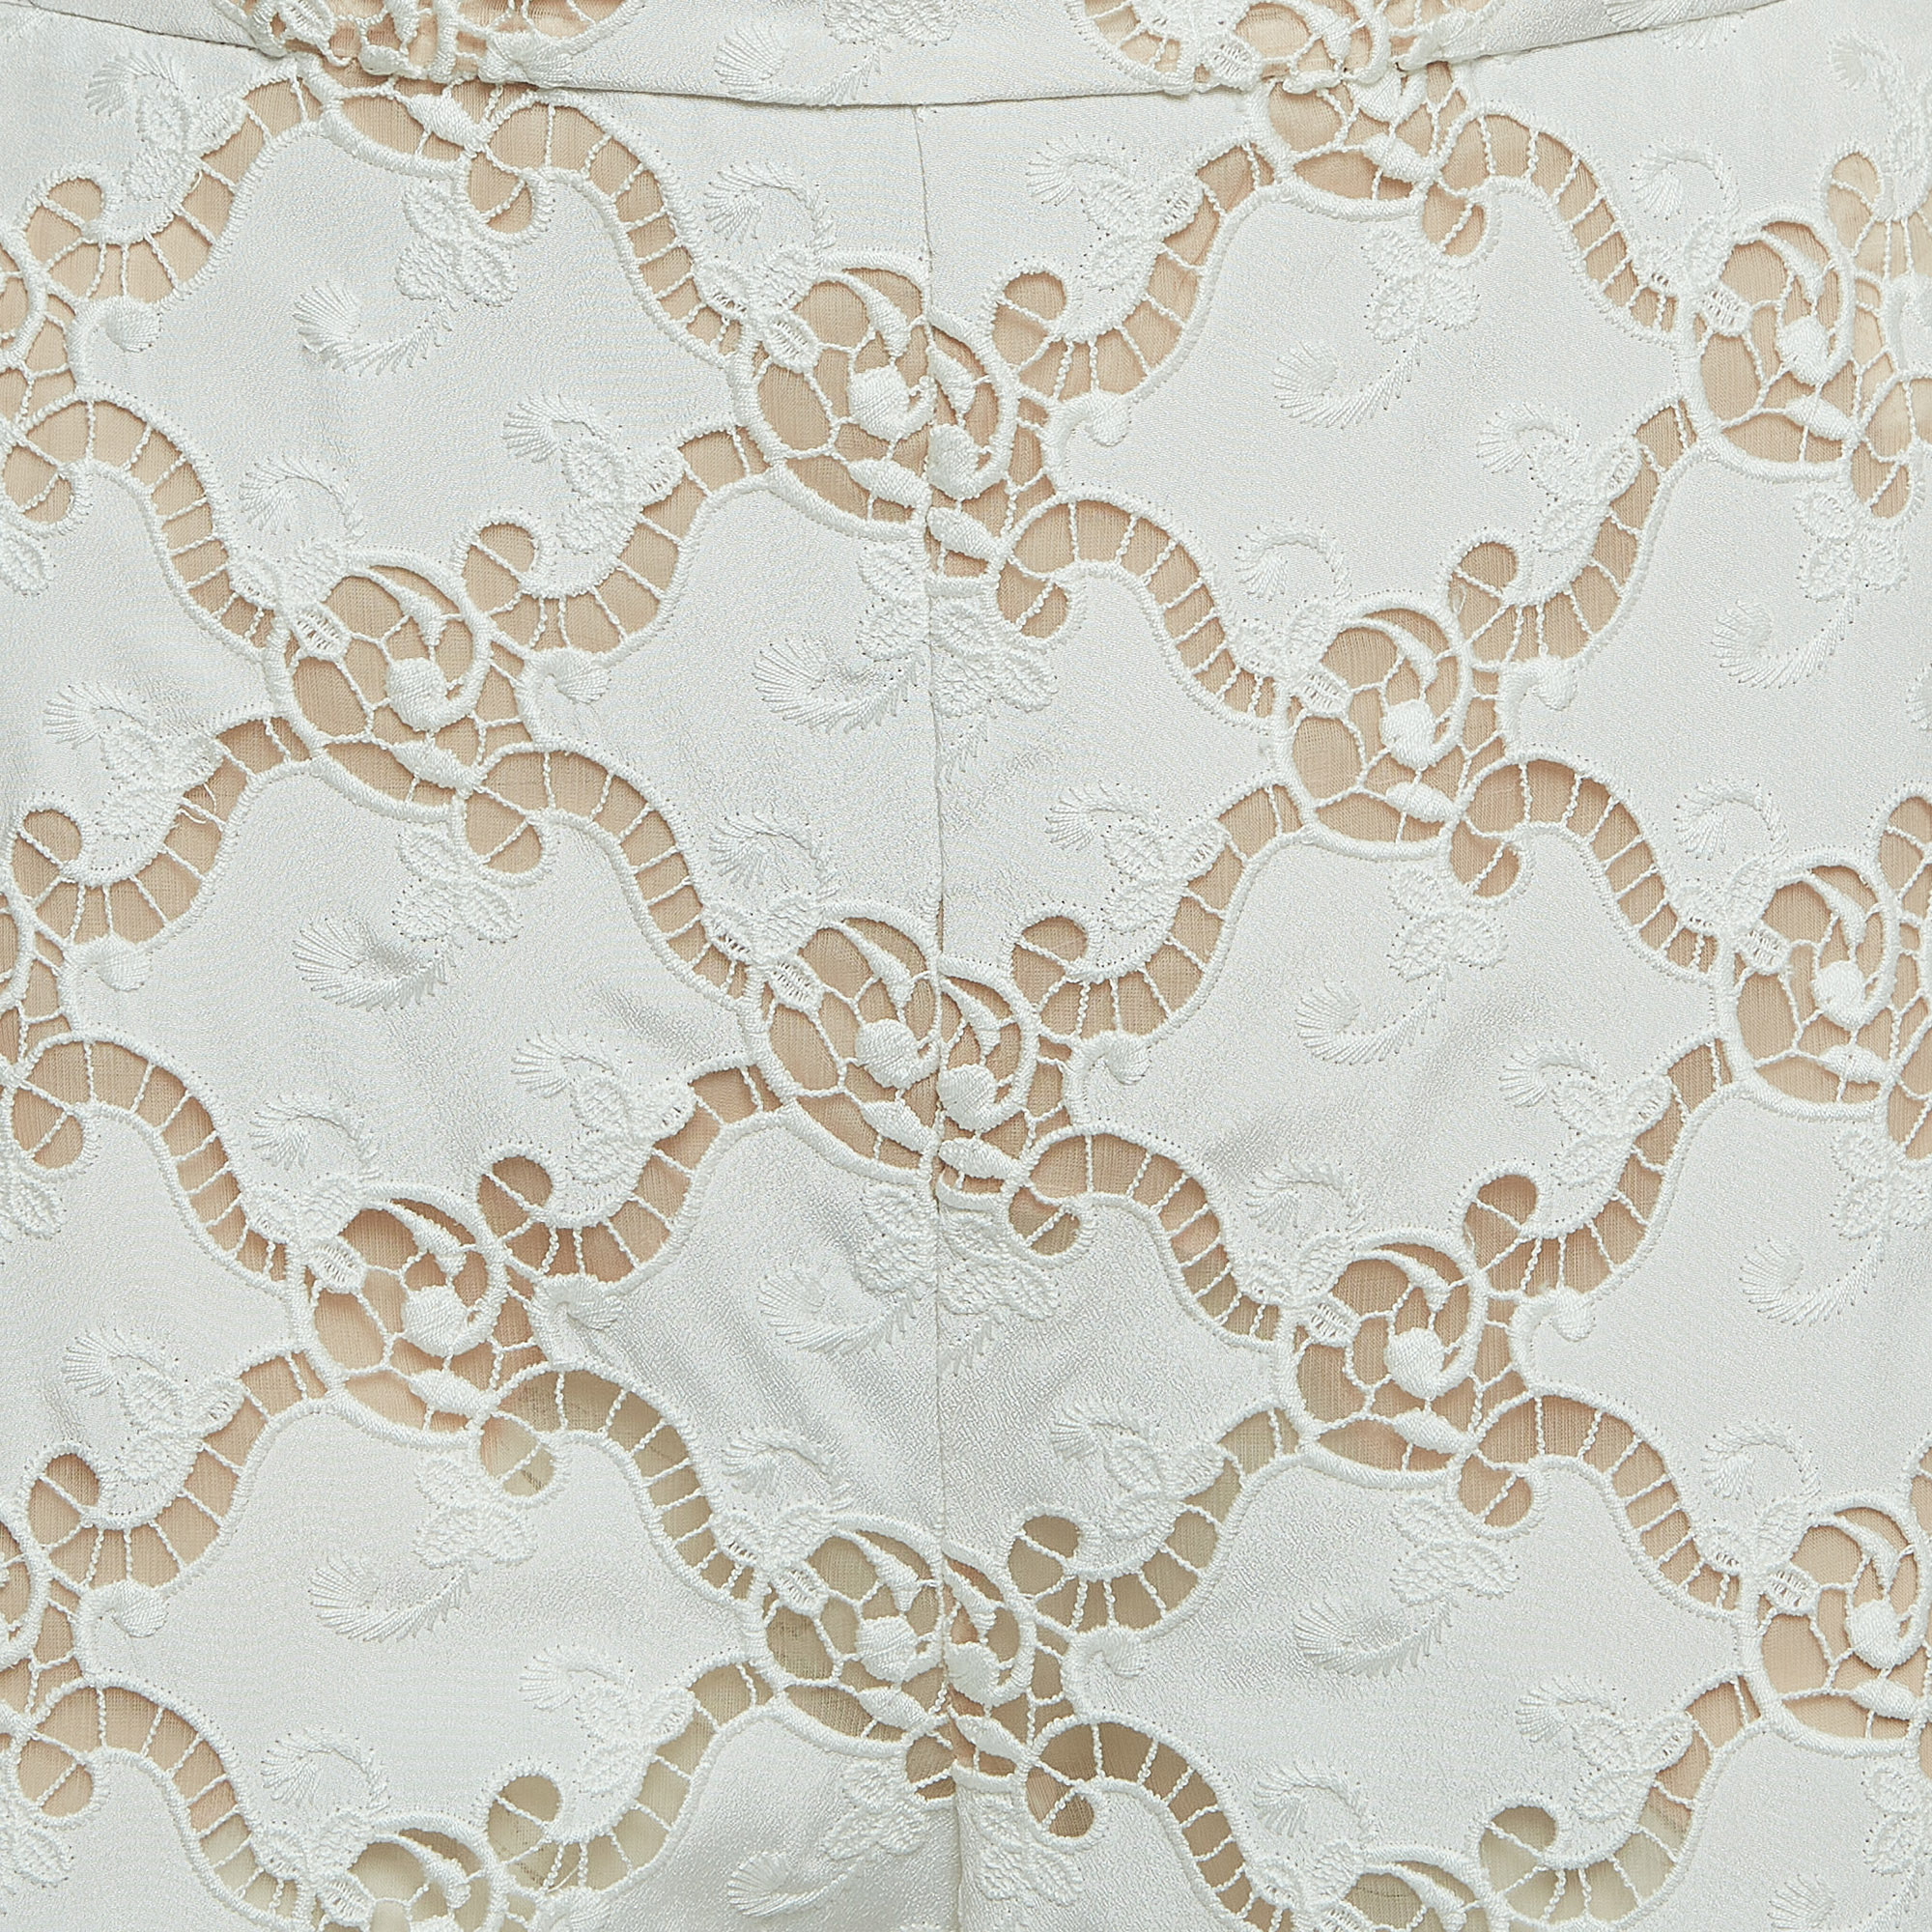 Chanel White Cut-out Cotton Blend Palazzo Pants S